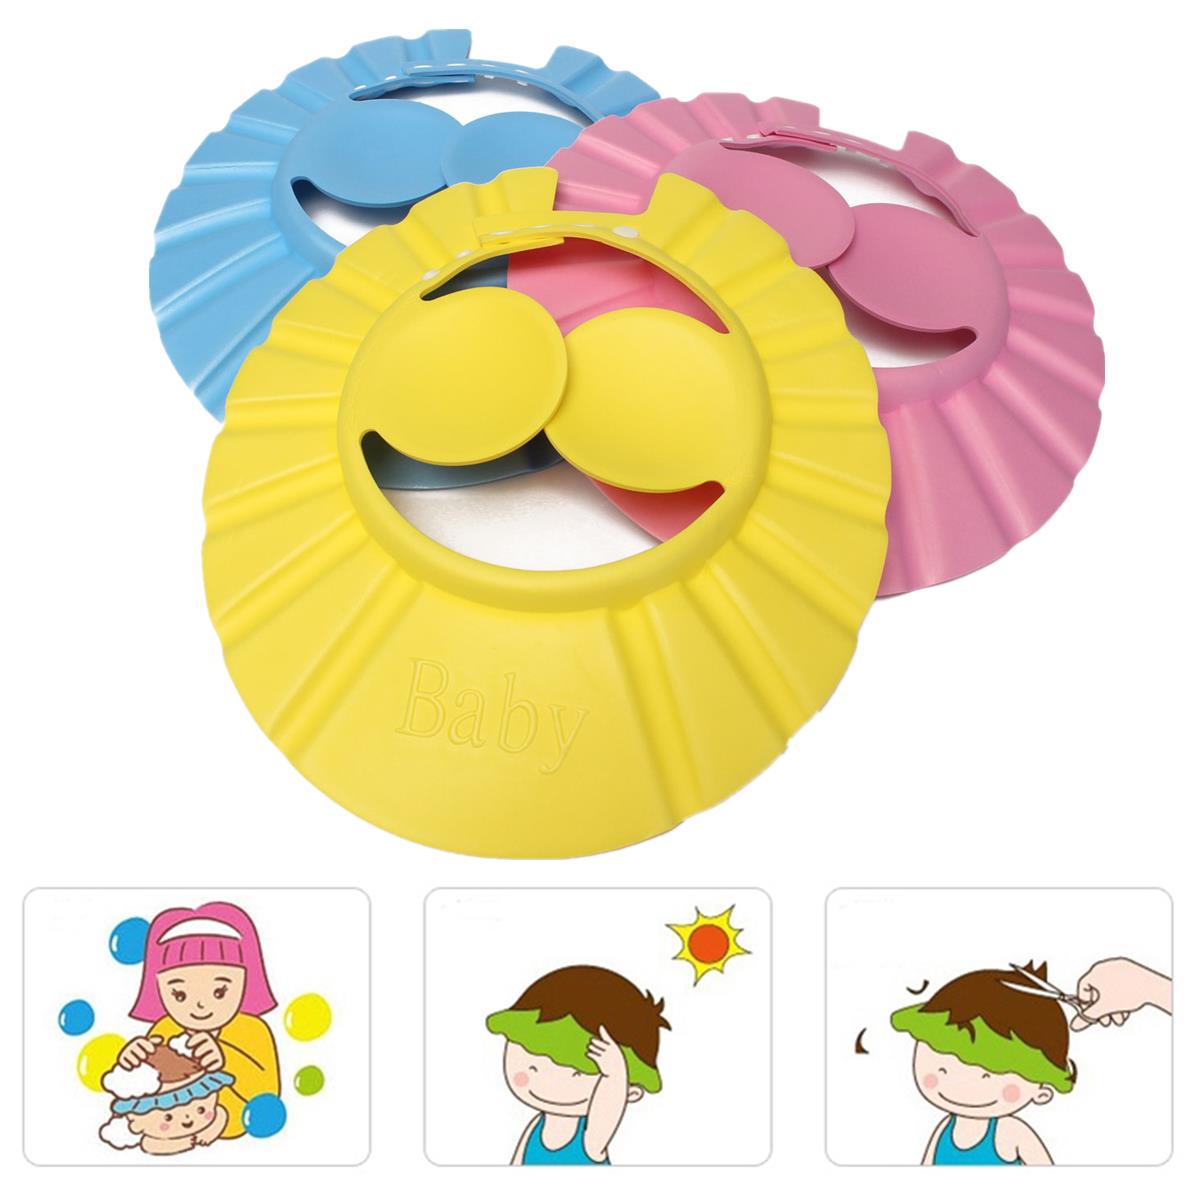 Soft-Adjustable-Baby-Shower-Cap-Protect-Children-Kid-Shampoo-Bath-Wash-Hair-Shield-Hat-Waterproof-Pr-1393415